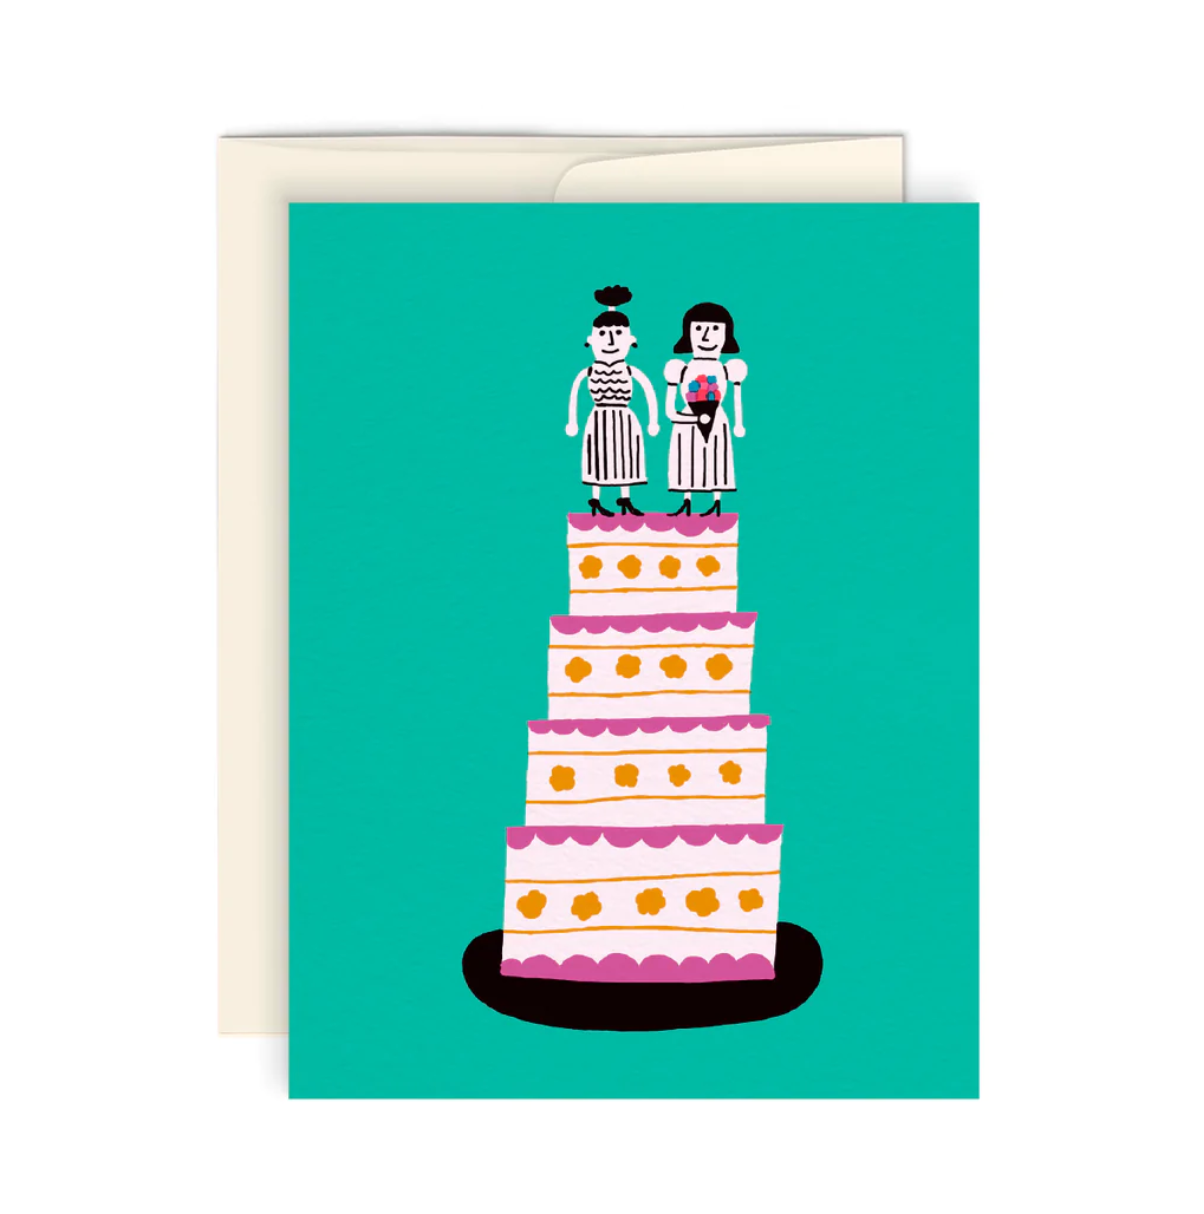 Lesbian Wedding Cake Greeting Card